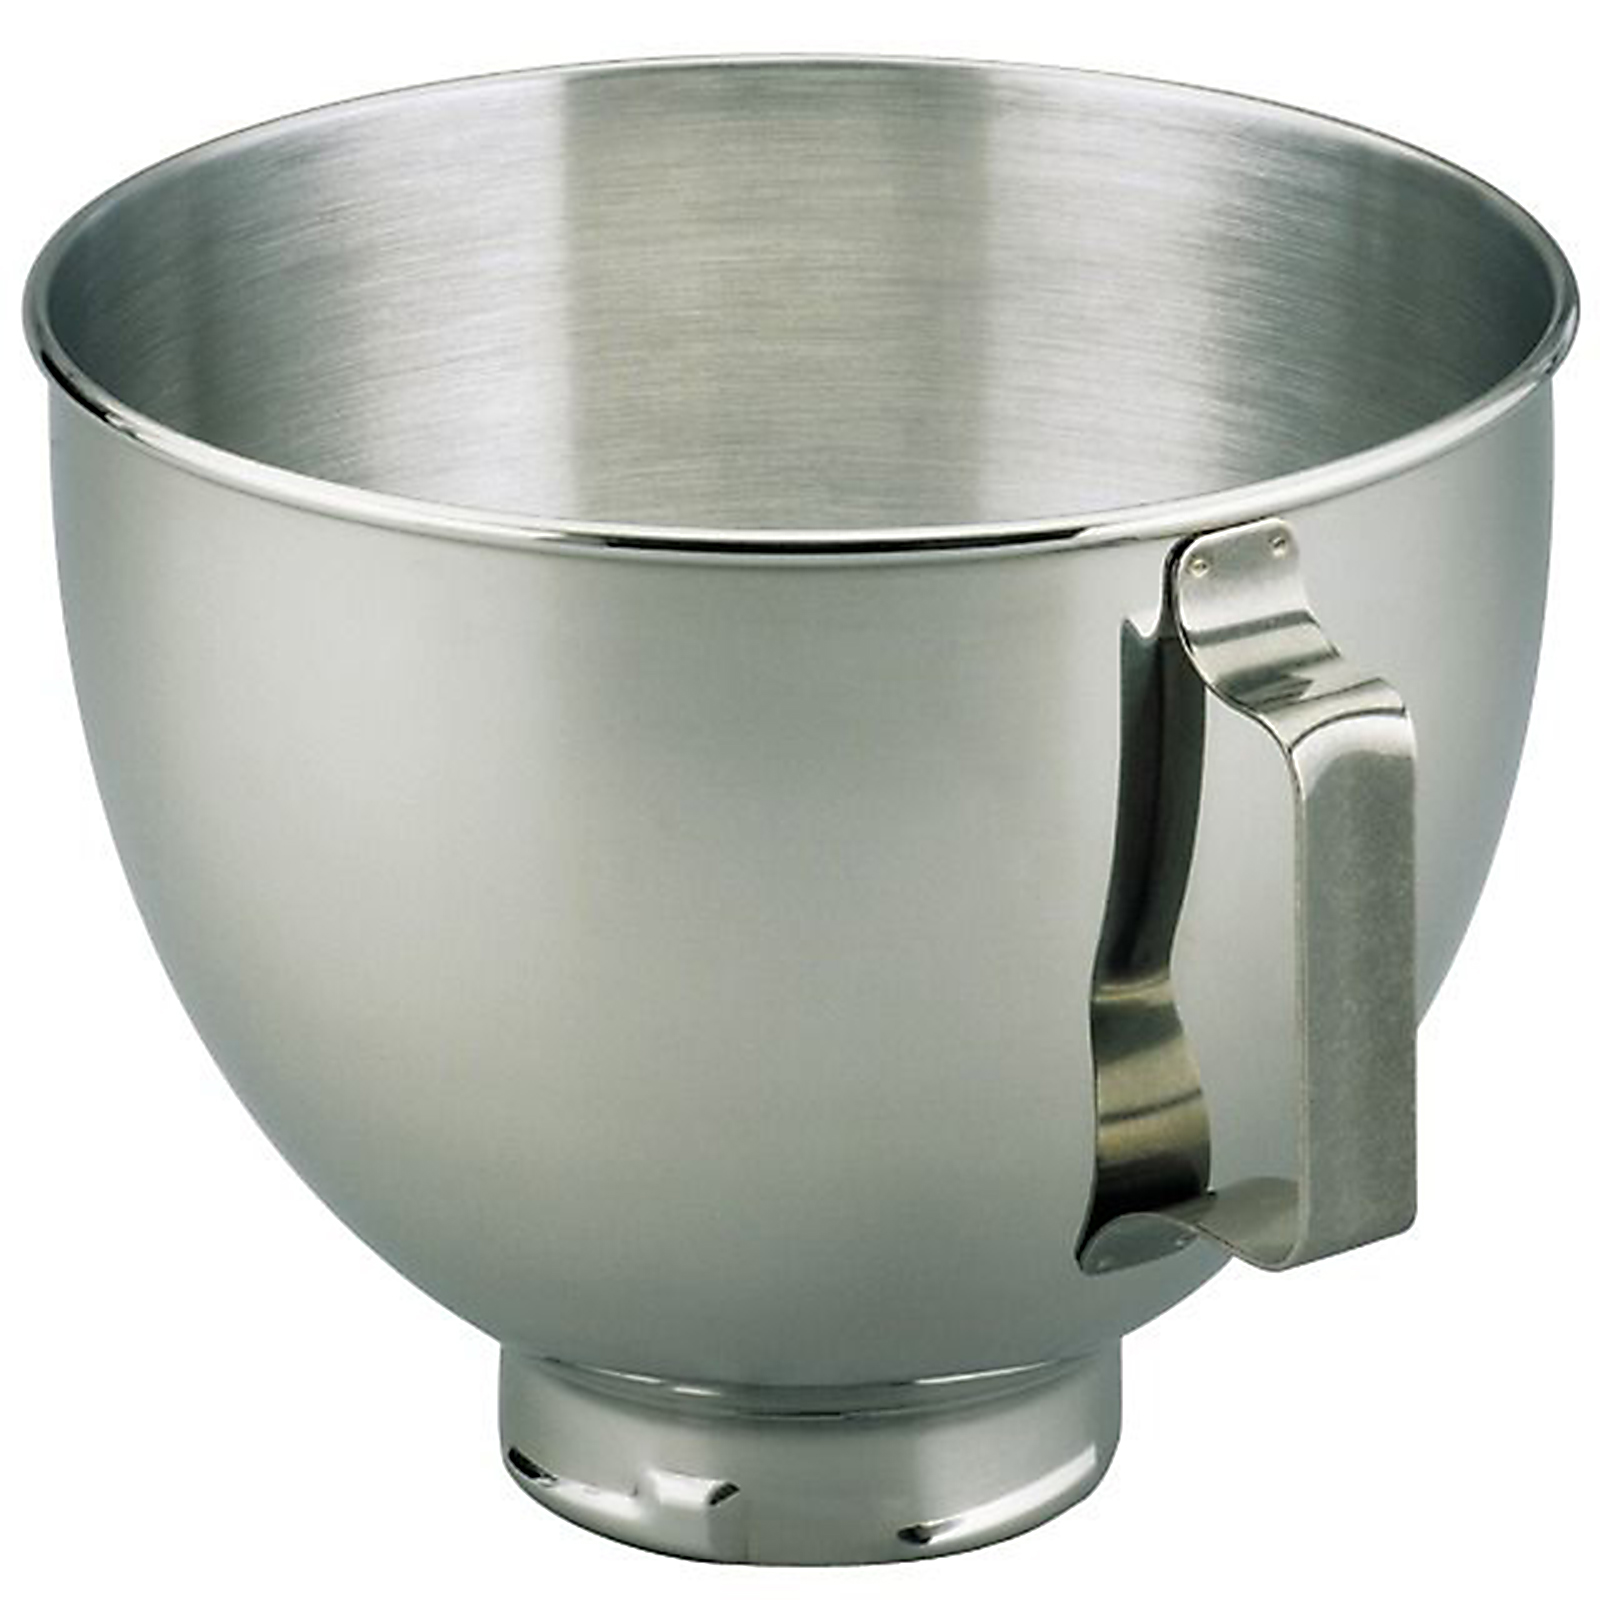 KitchenAid K45SBWH 4.5 Quart Stainless Steel Mixing Bowl with Handle Stainless Steel Mixing Bowl With Handle